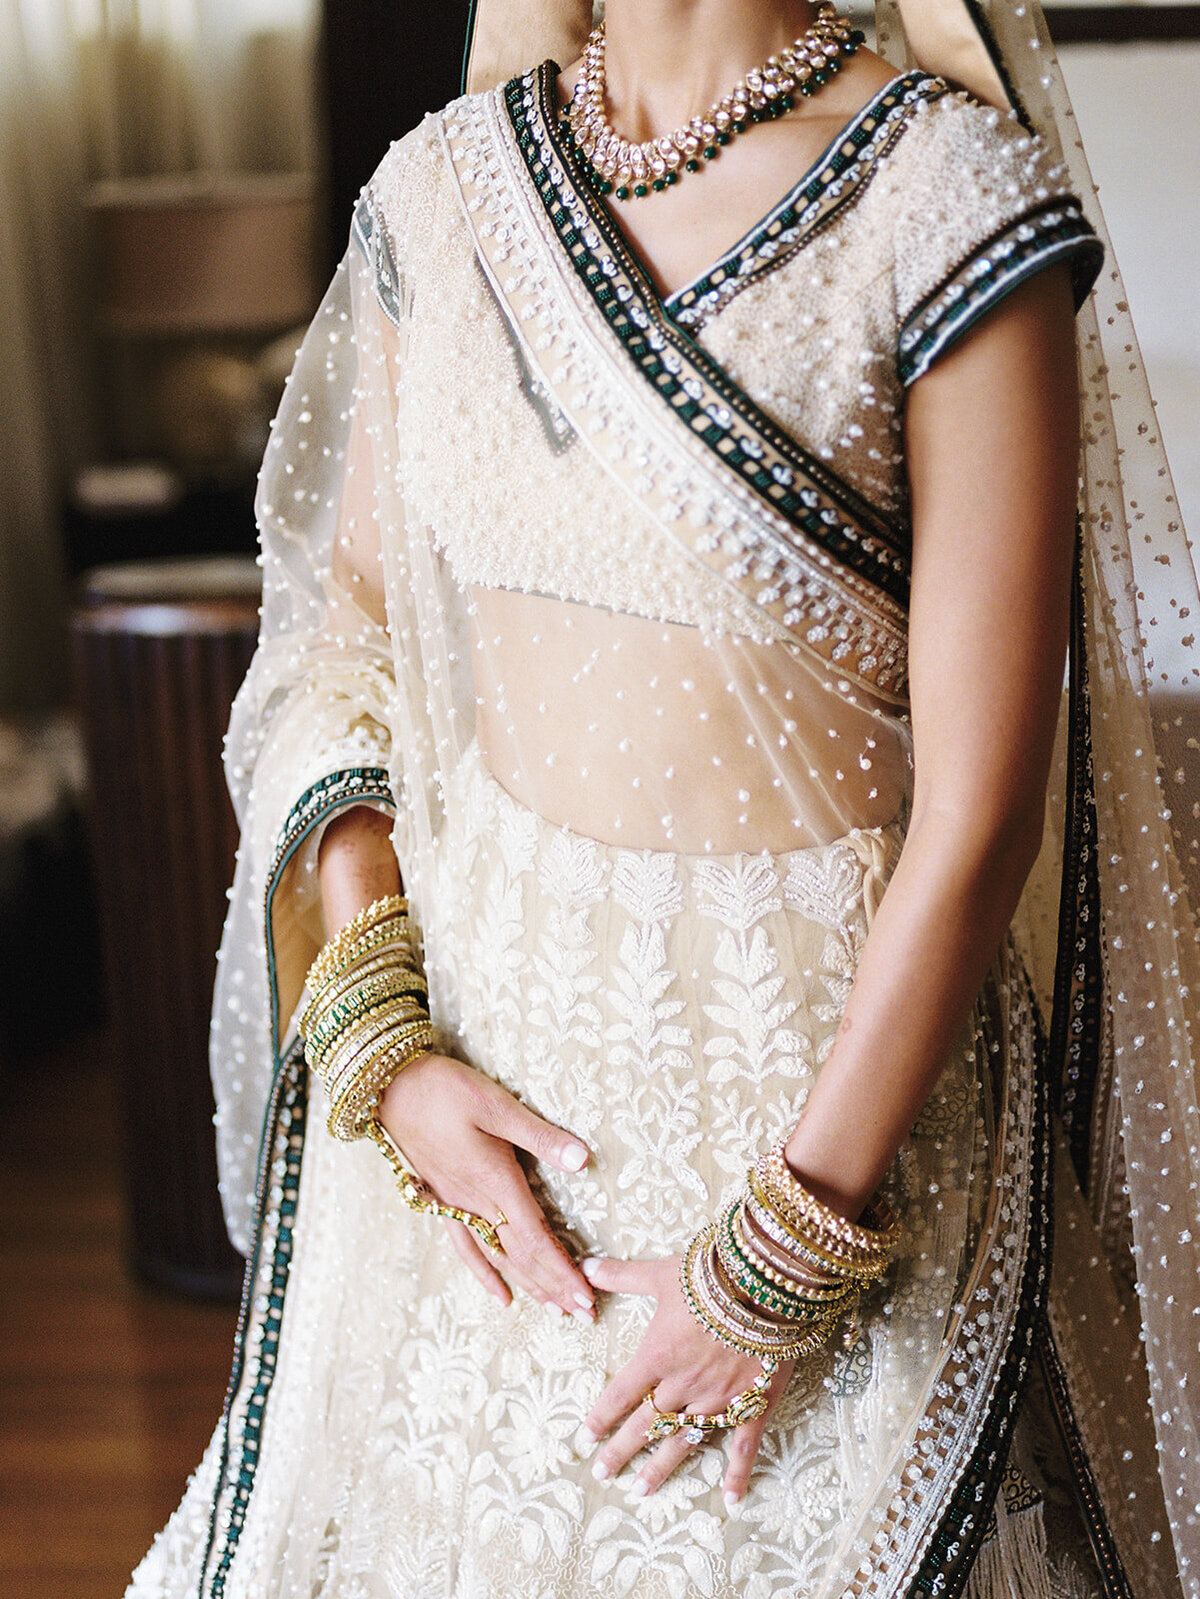 Sari details at a South Asian Fusion wedding in Colorado